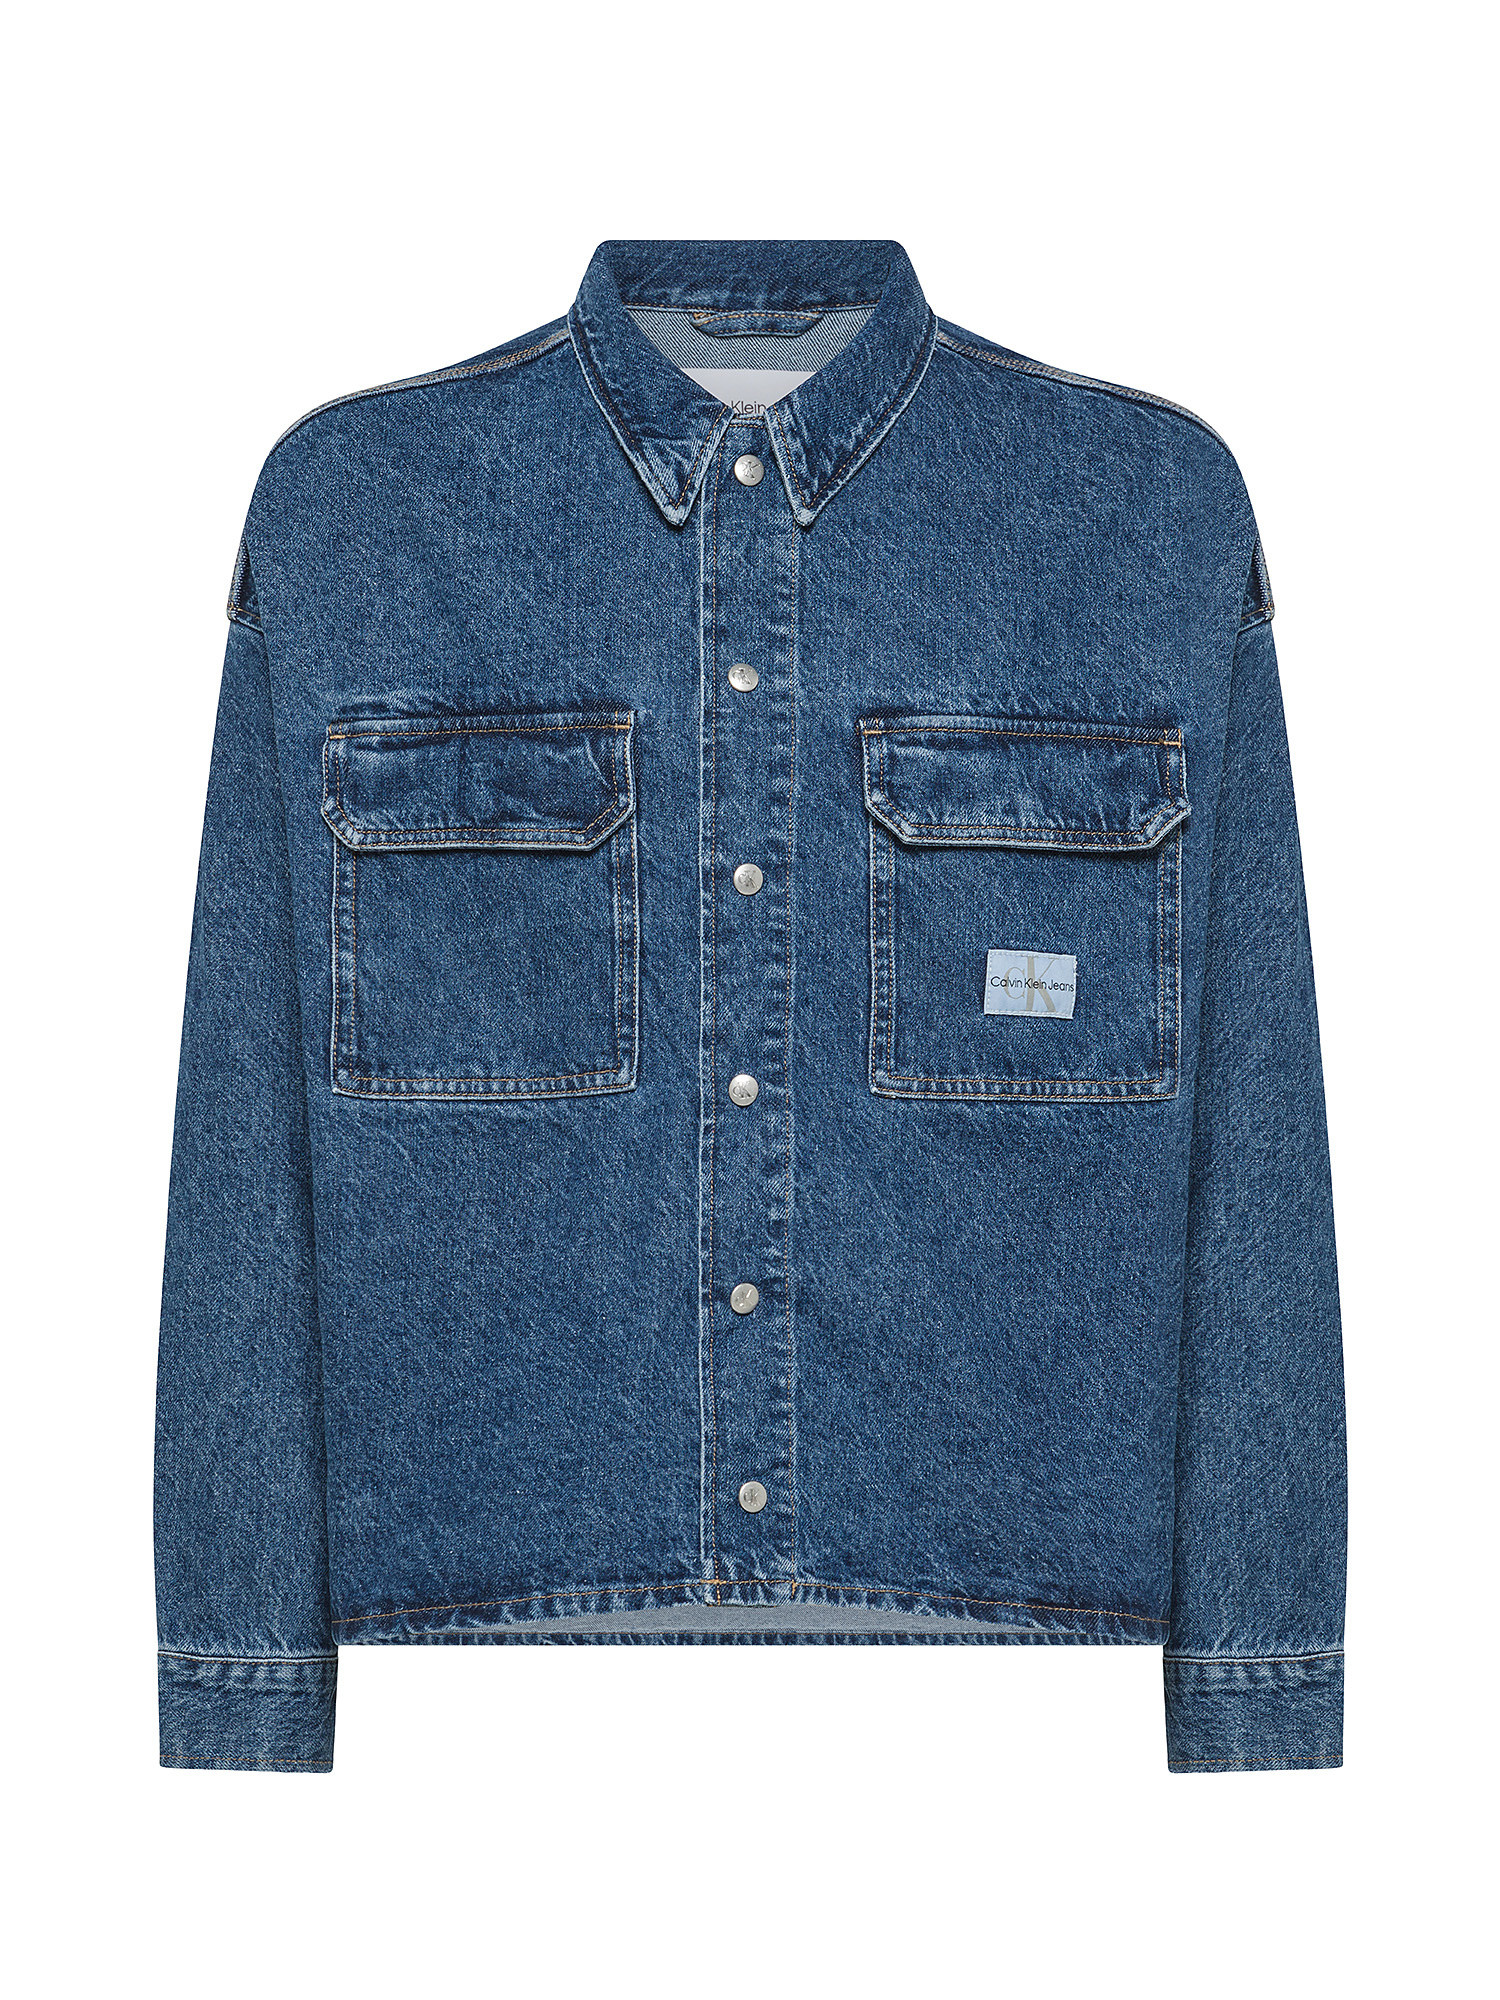 Calvin Klein Jeans - Denim shirt, Denim, large image number 0